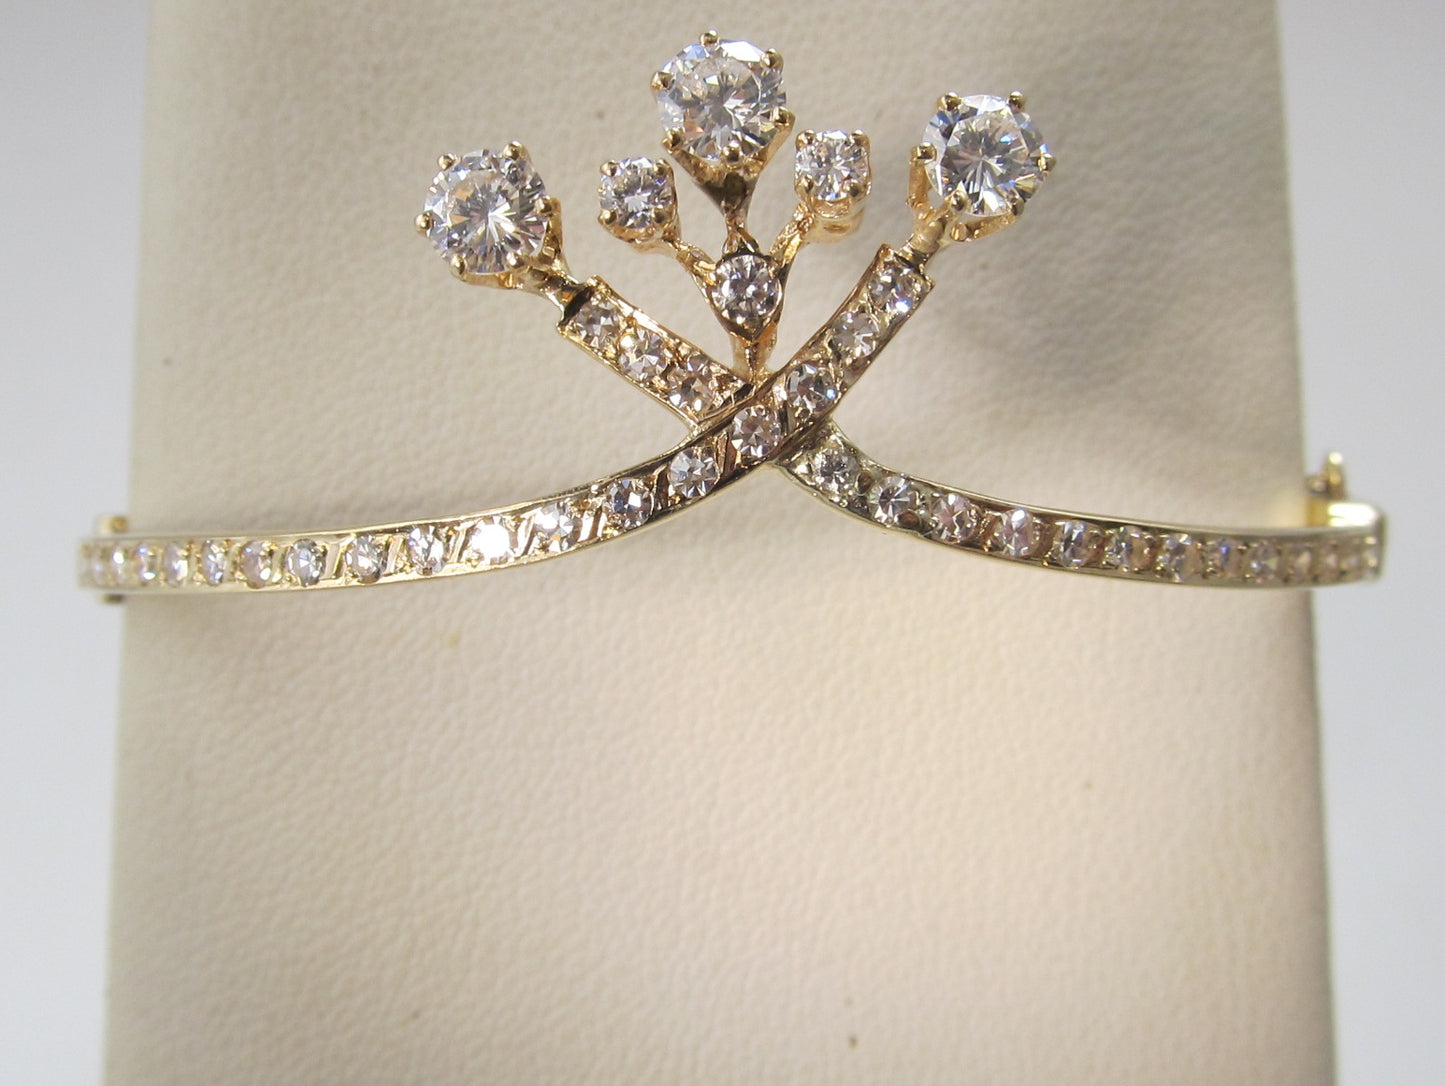 Antique style 1.80ct diamond bangle bracelet